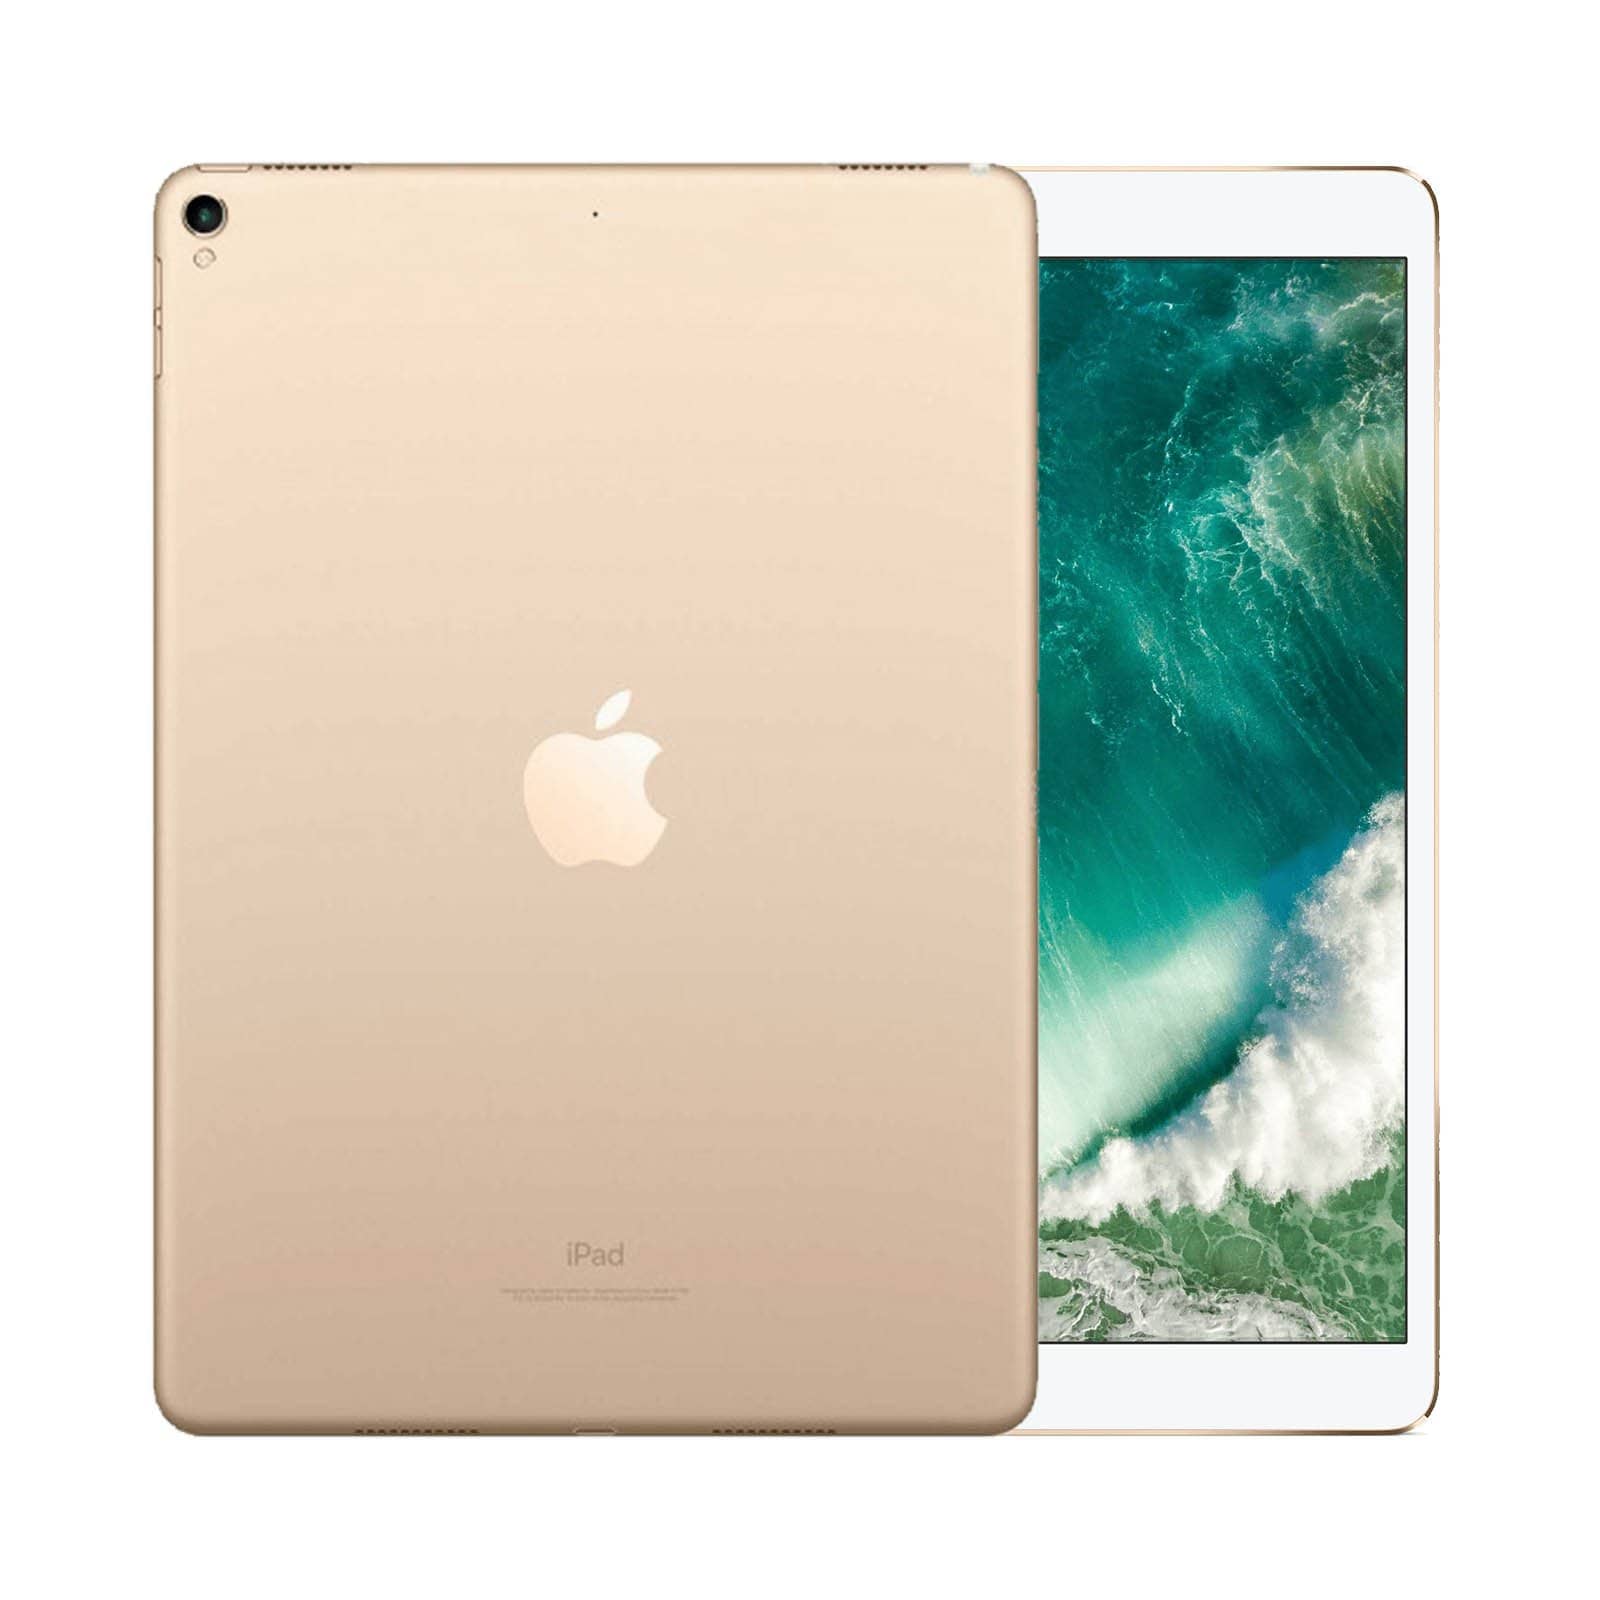 iPad Pro 10.5 Inch 64GB Gold Good - WiFi 64GB Gold Good